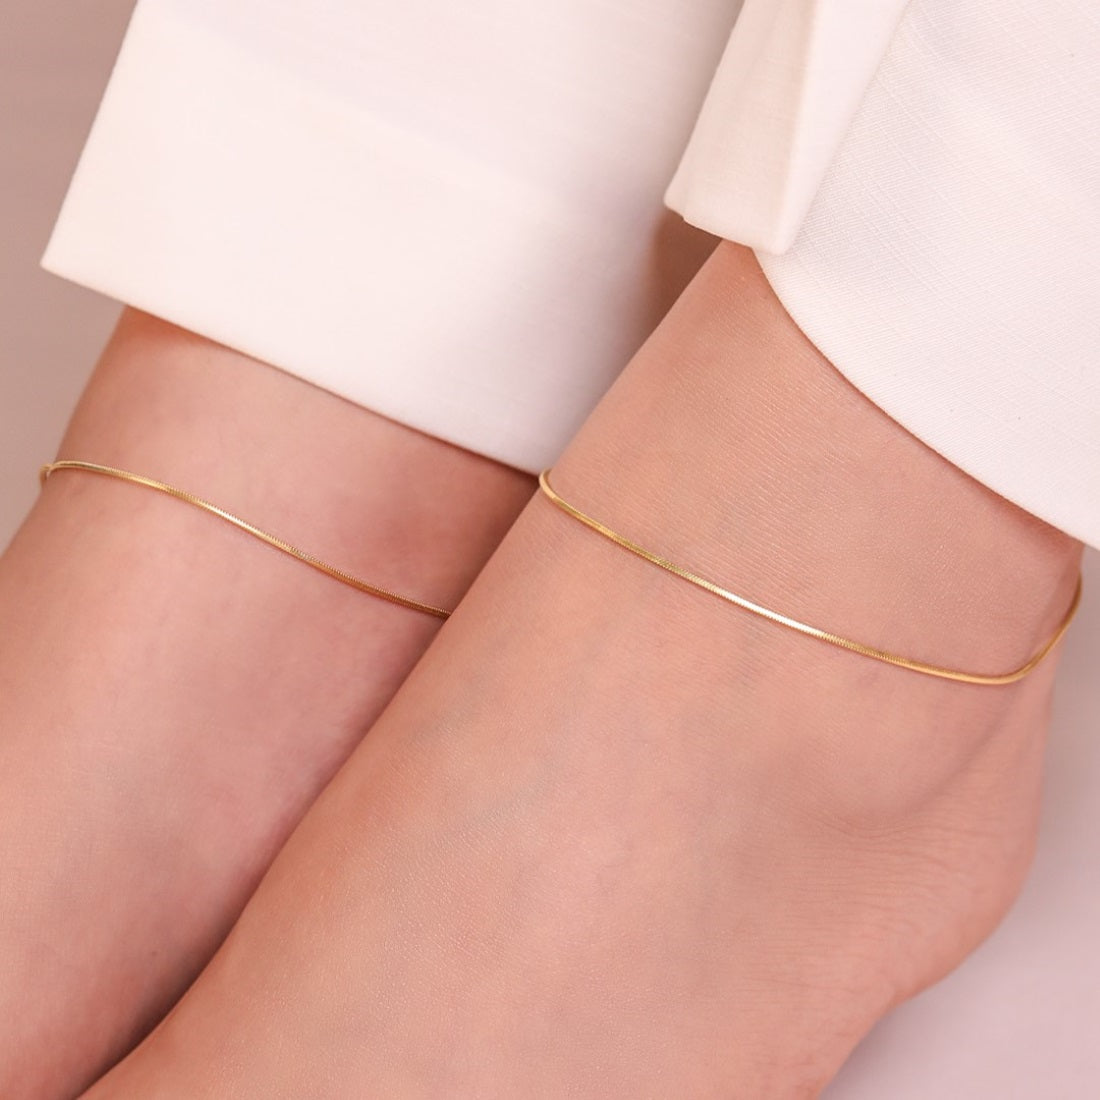 Sleek Shimmer Gold-Plated 925 Sterling Silver Snake Chain Anklet